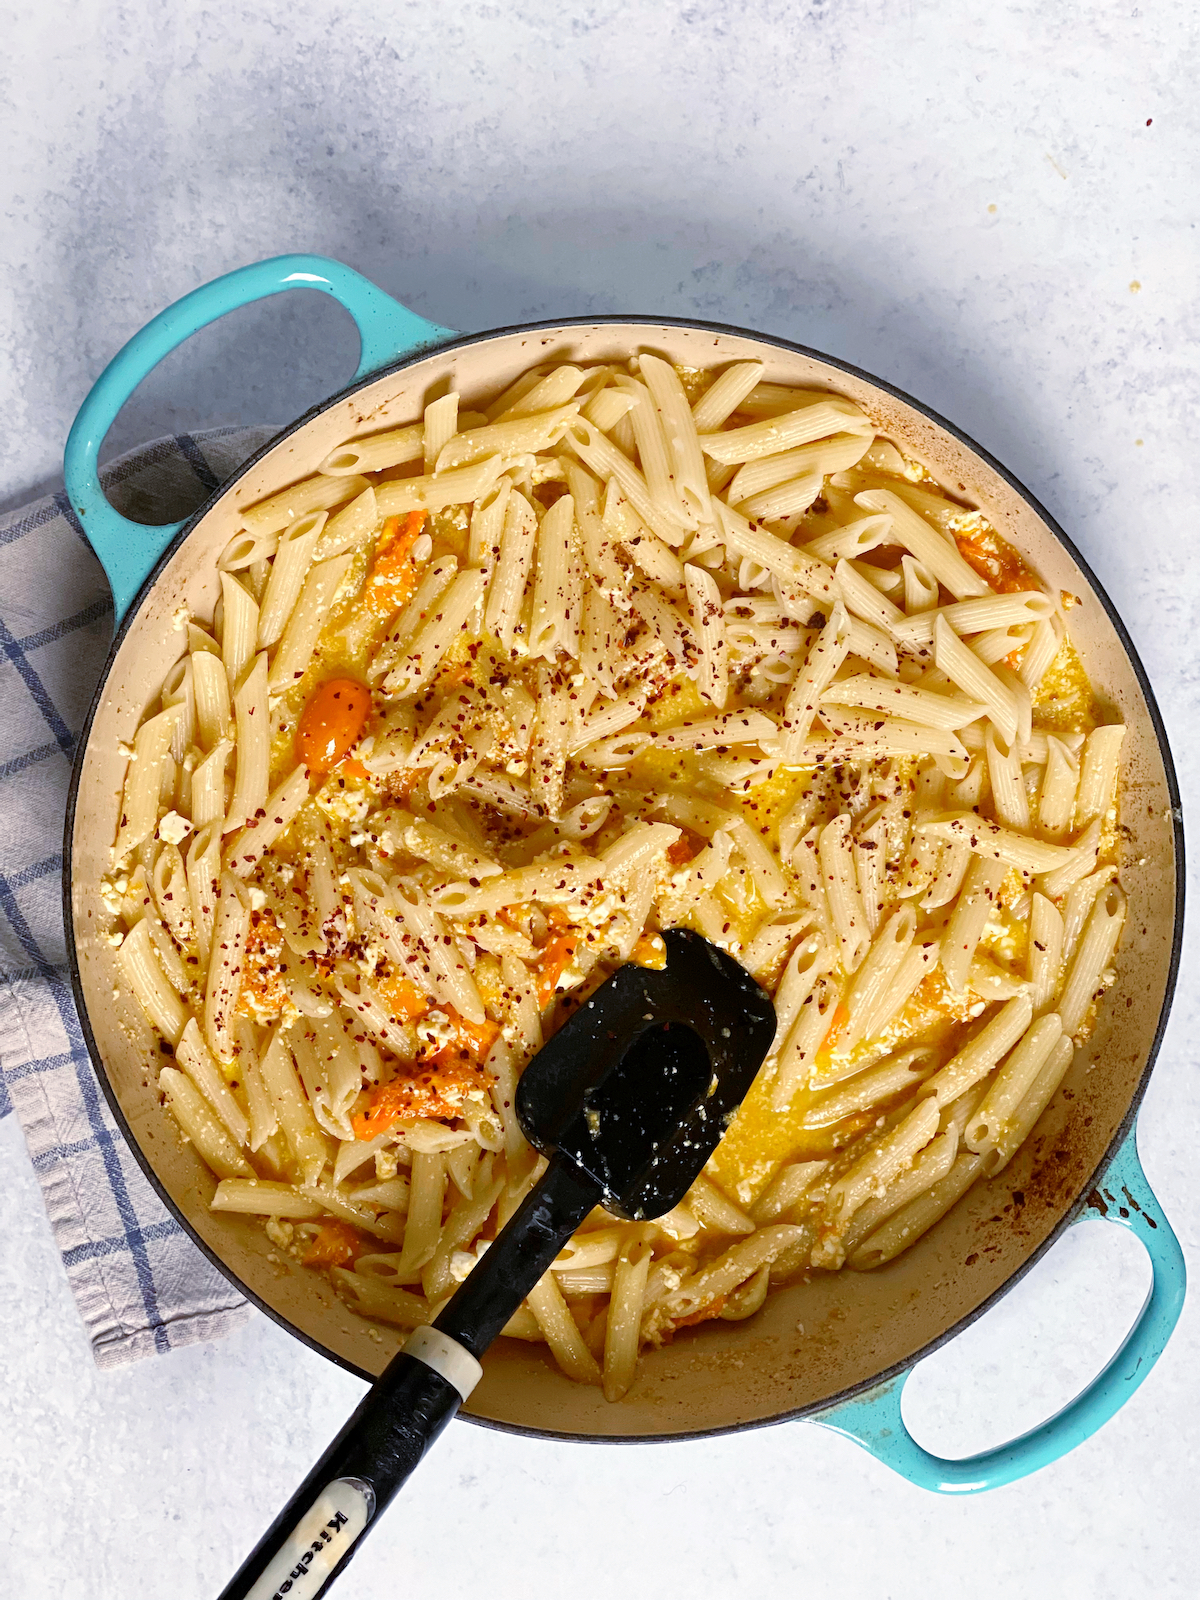 Lemony Feta Pasta: The DIJFY version of the viral Feta Pasta recipe, made as family-friendly as possible